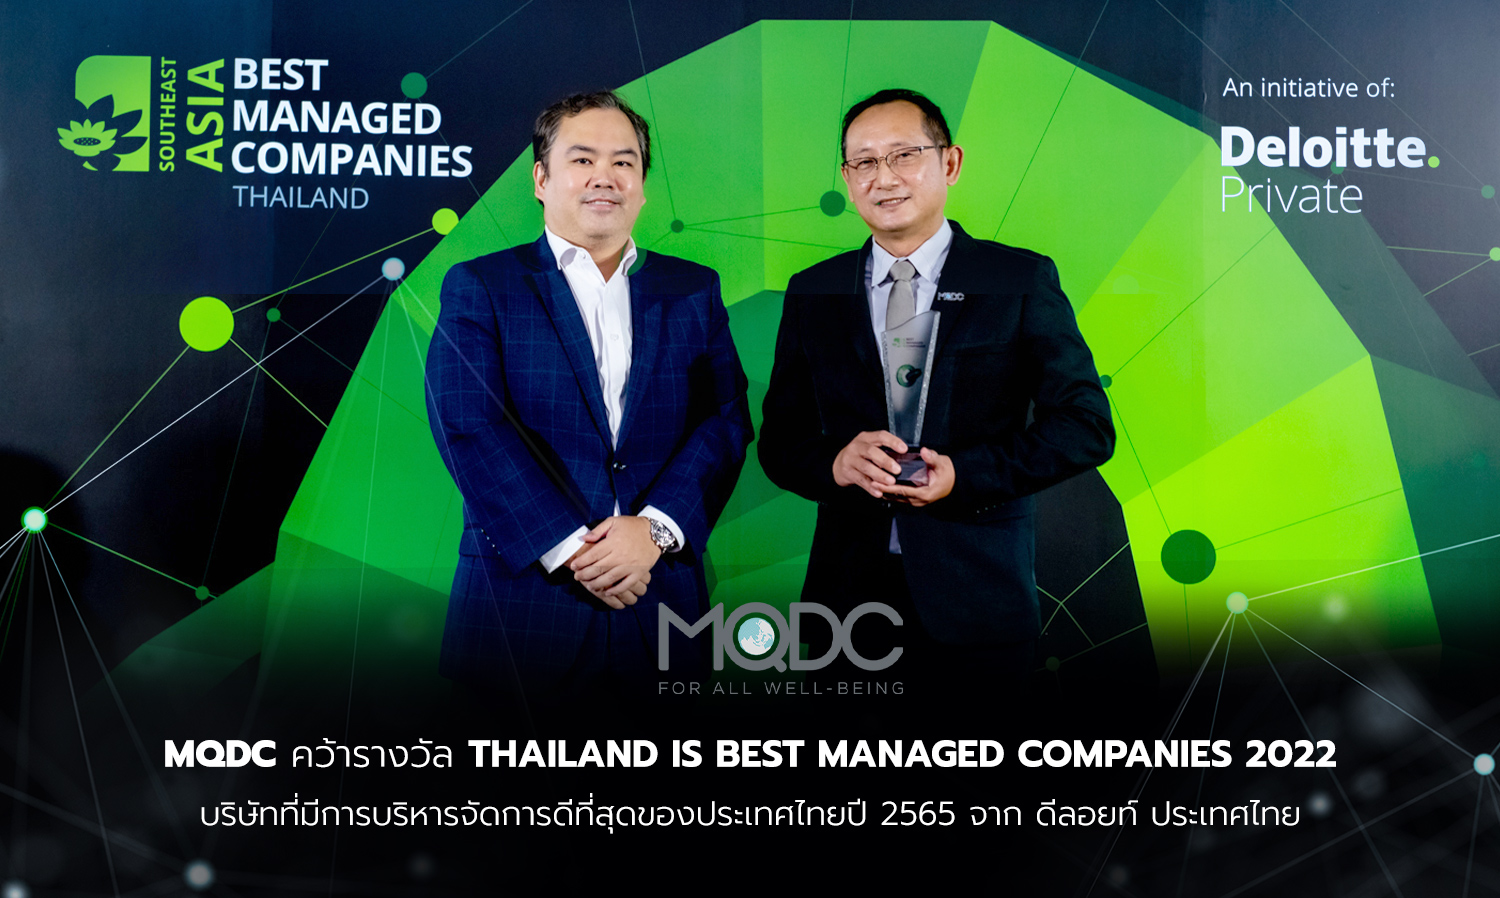 MQDC คว้ารางวัล Thailand is Best Managed Companies 2022 บริษัทที่มีการบริหารจัดการดีที่สุดของประเทศไทยปี 2565 จาก ดีลอยท์ ประเทศไทย